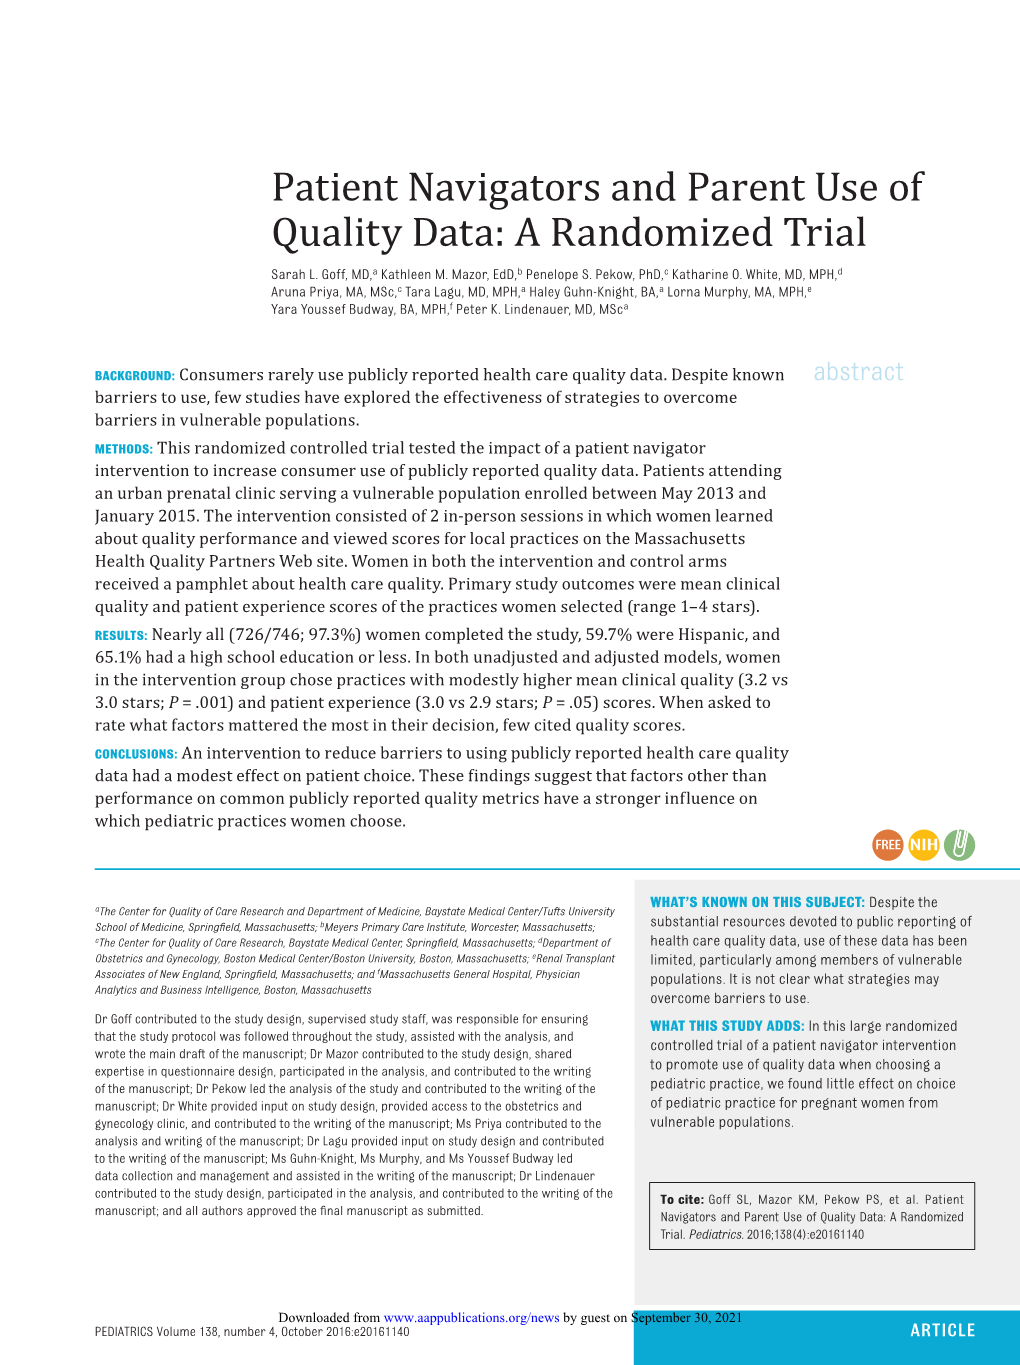 Patient Navigators and Parent Use of Quality Data: a Randomized Trial Sarah L